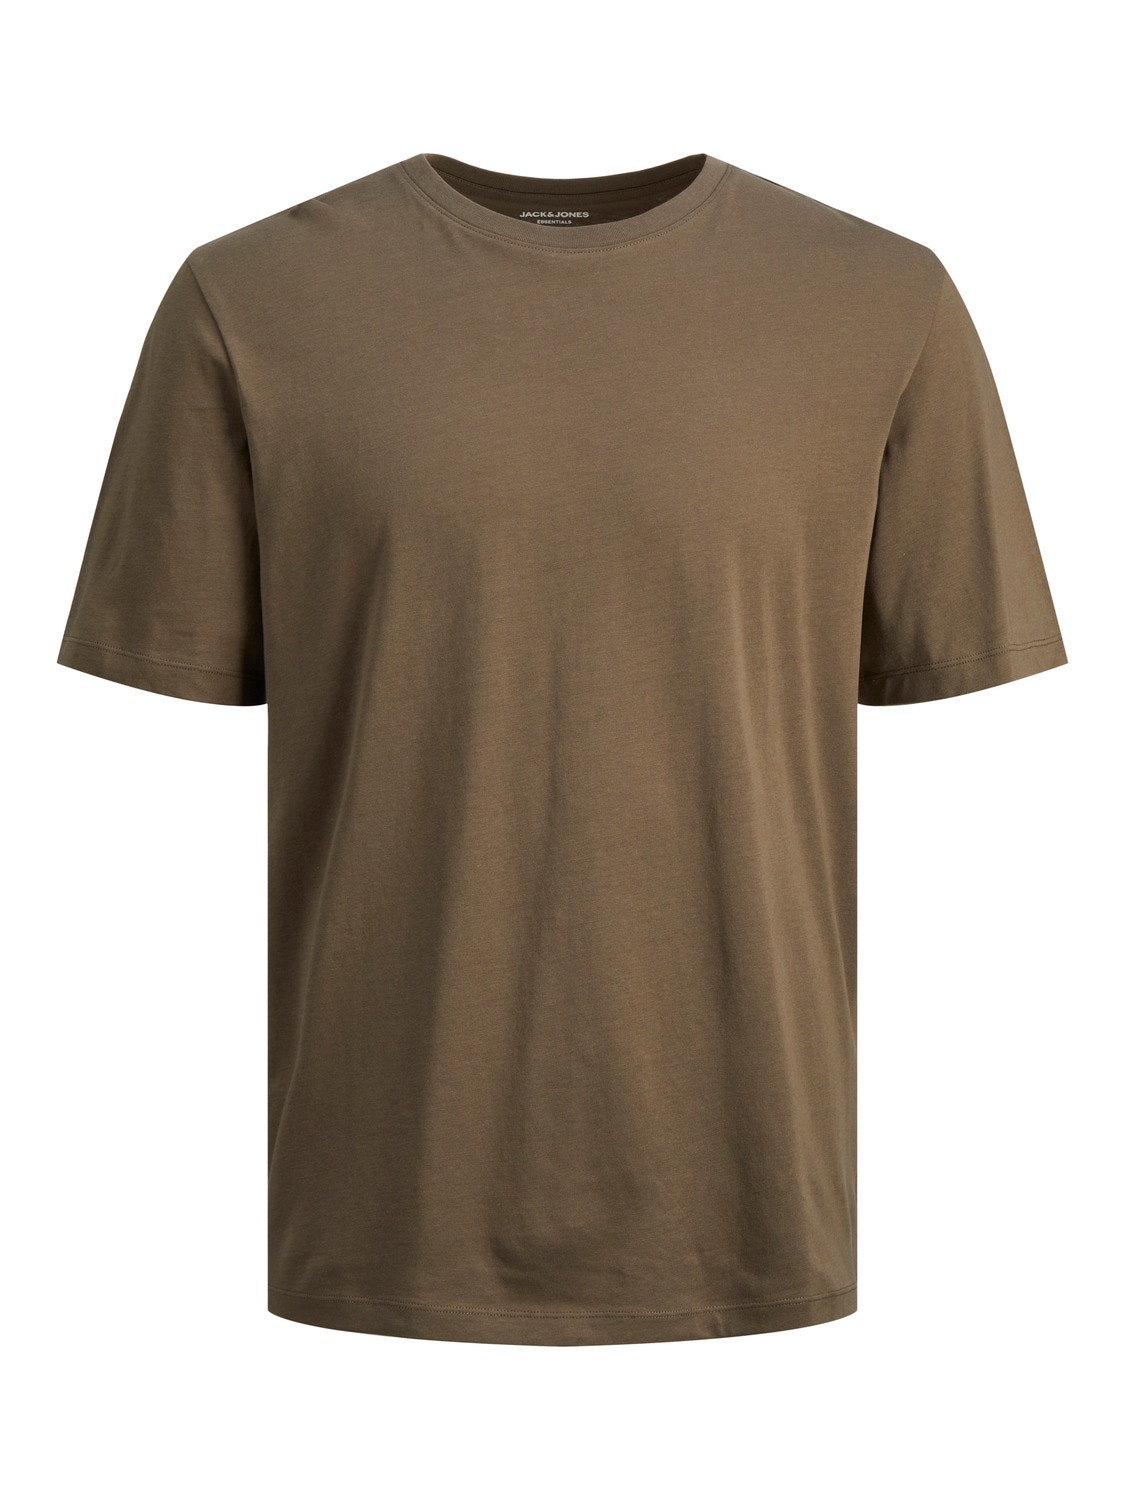 Jack & Jones Plain Crew neck T-shirt -Bungee Cord - 12156101